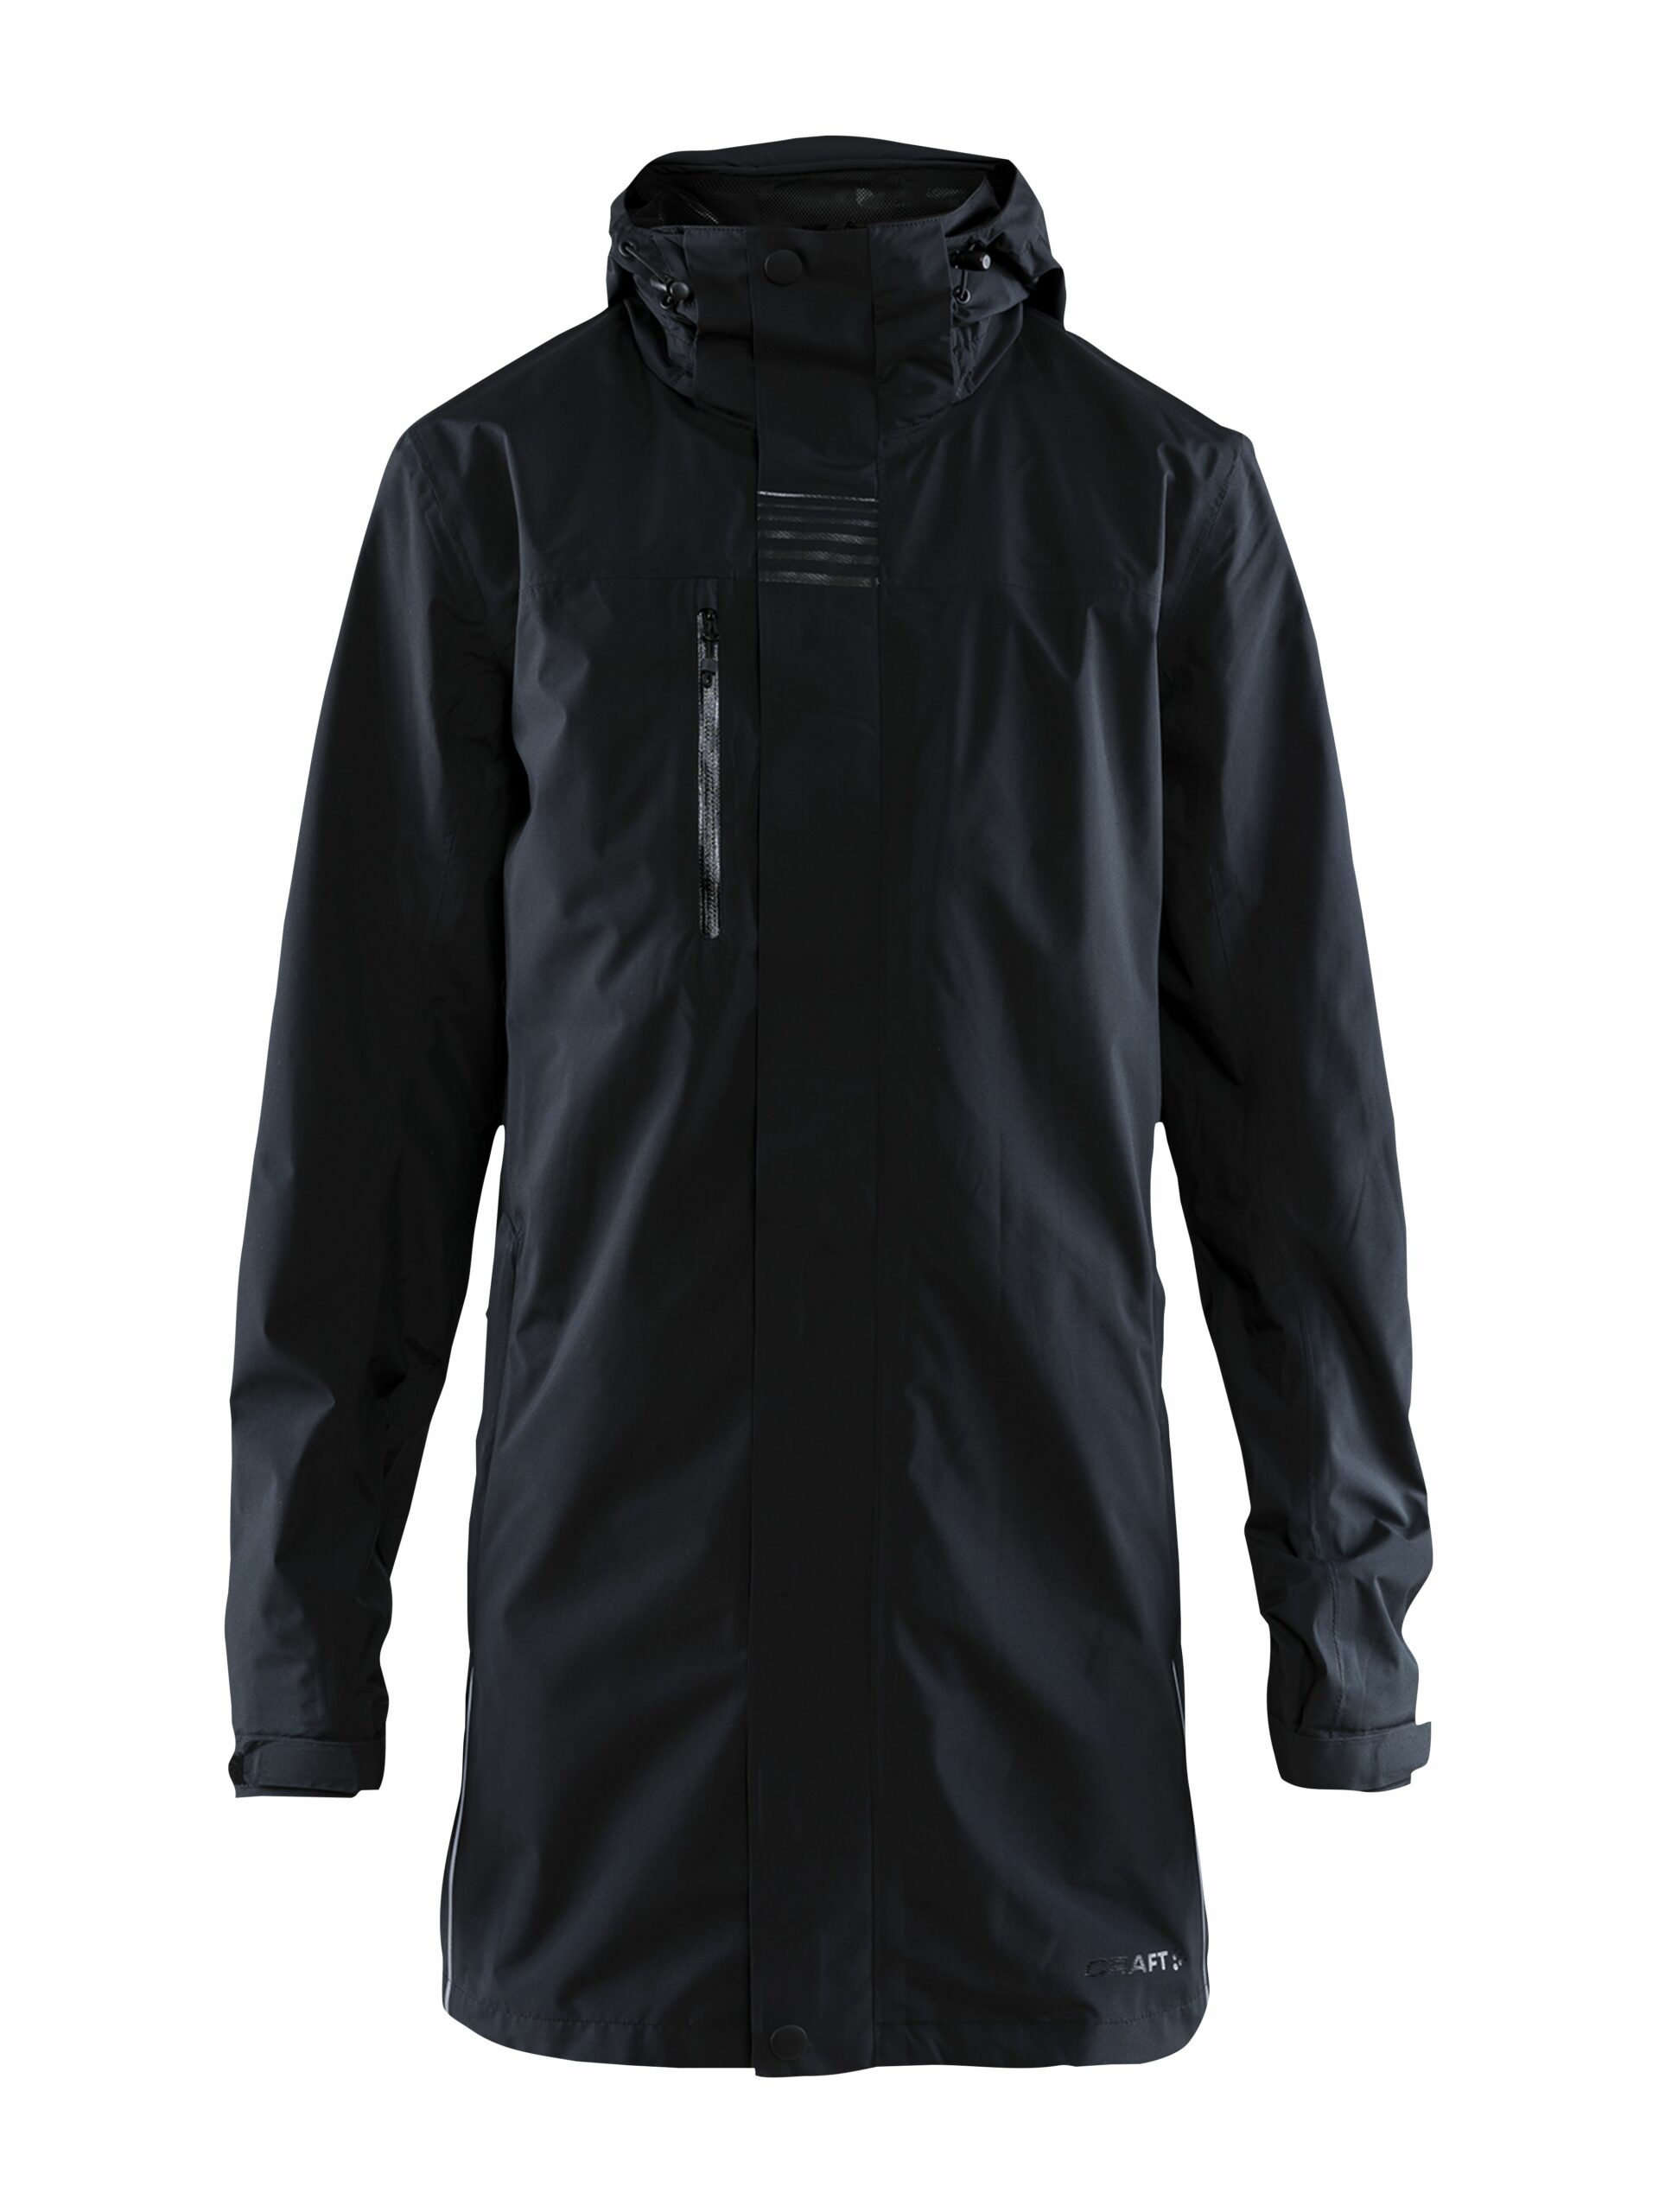 Craft - Urban rain coat Maend - Black S